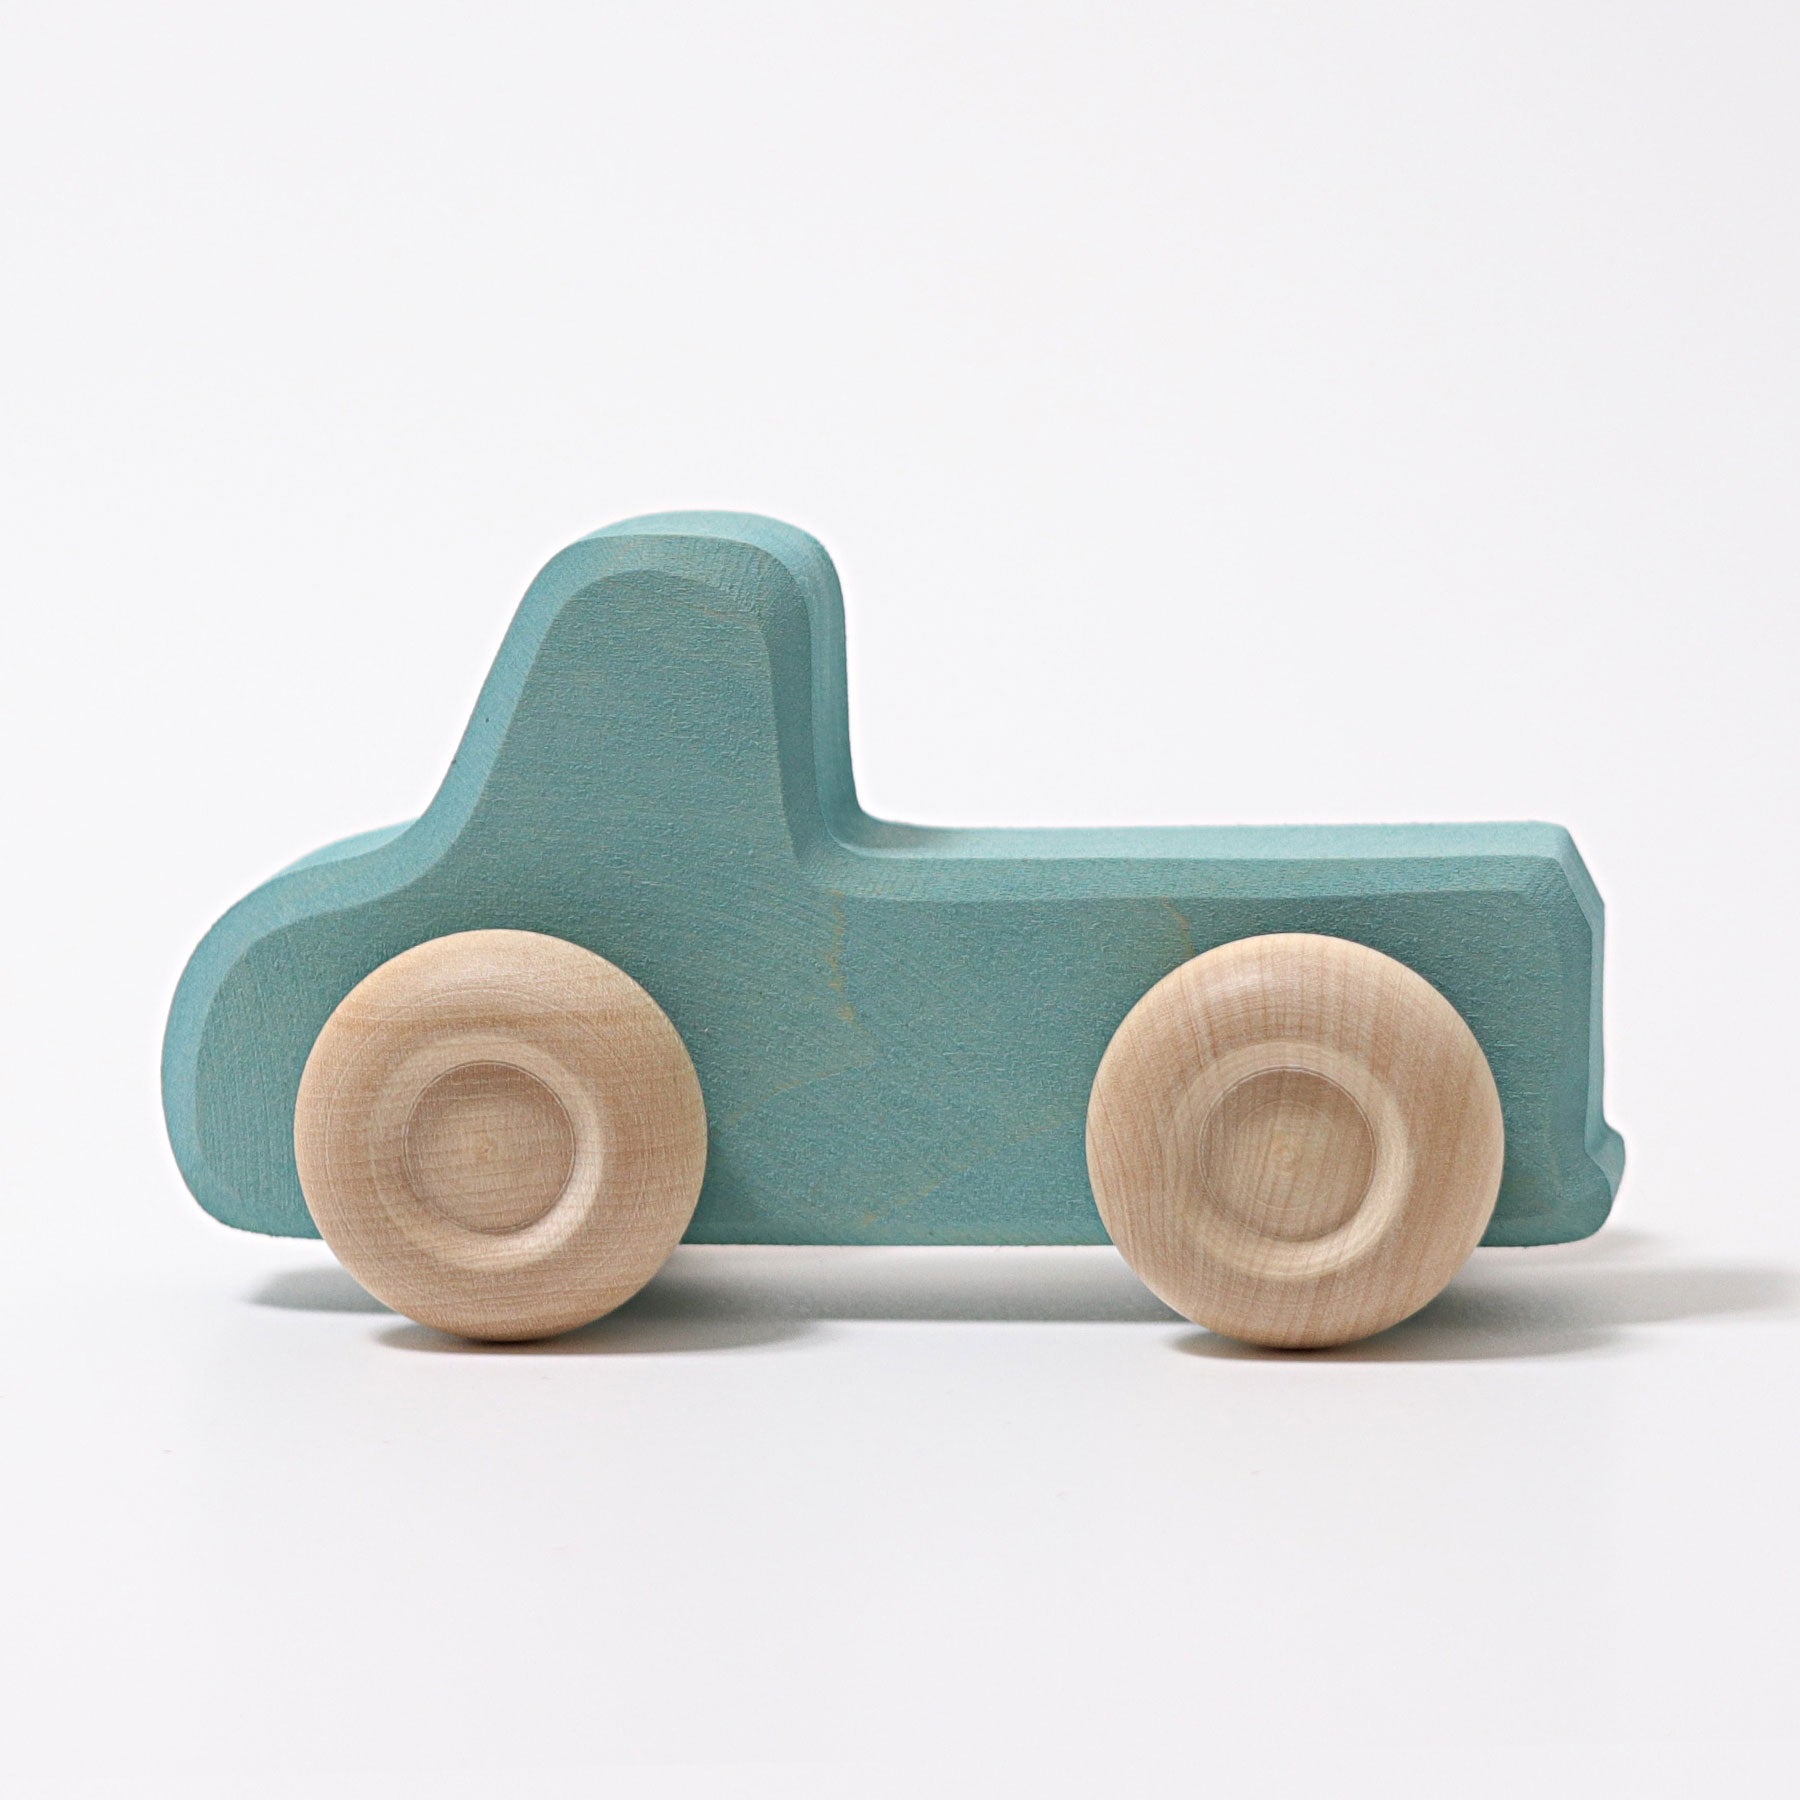 Grimm's Wooden Cars Slimline - Bueno Blocks